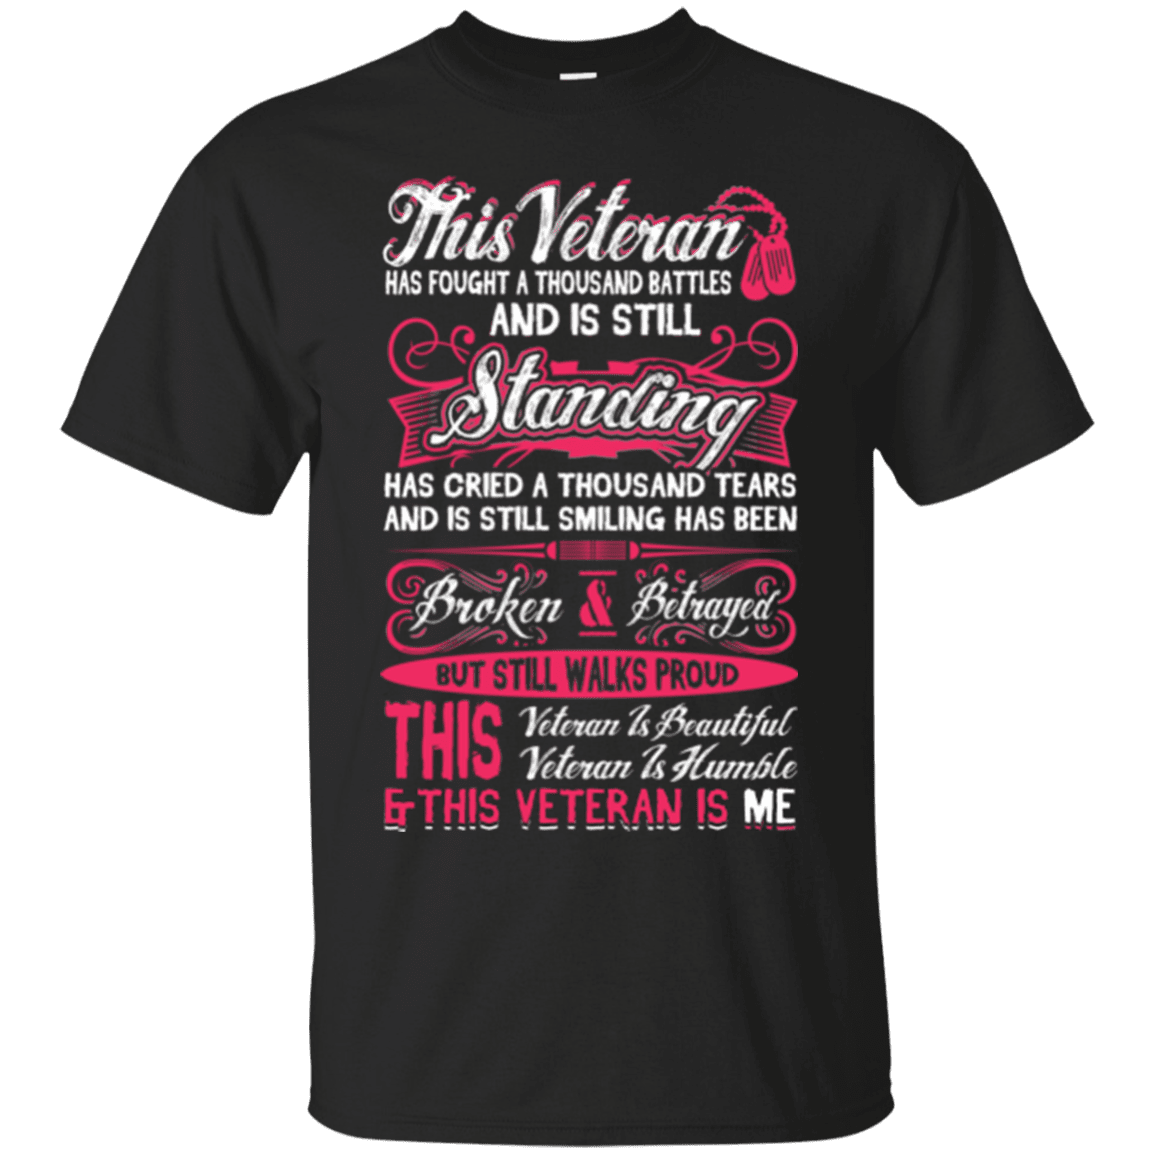 Military T-Shirt "This Veteran is Beautiful and Humble"-TShirt-General-Veterans Nation